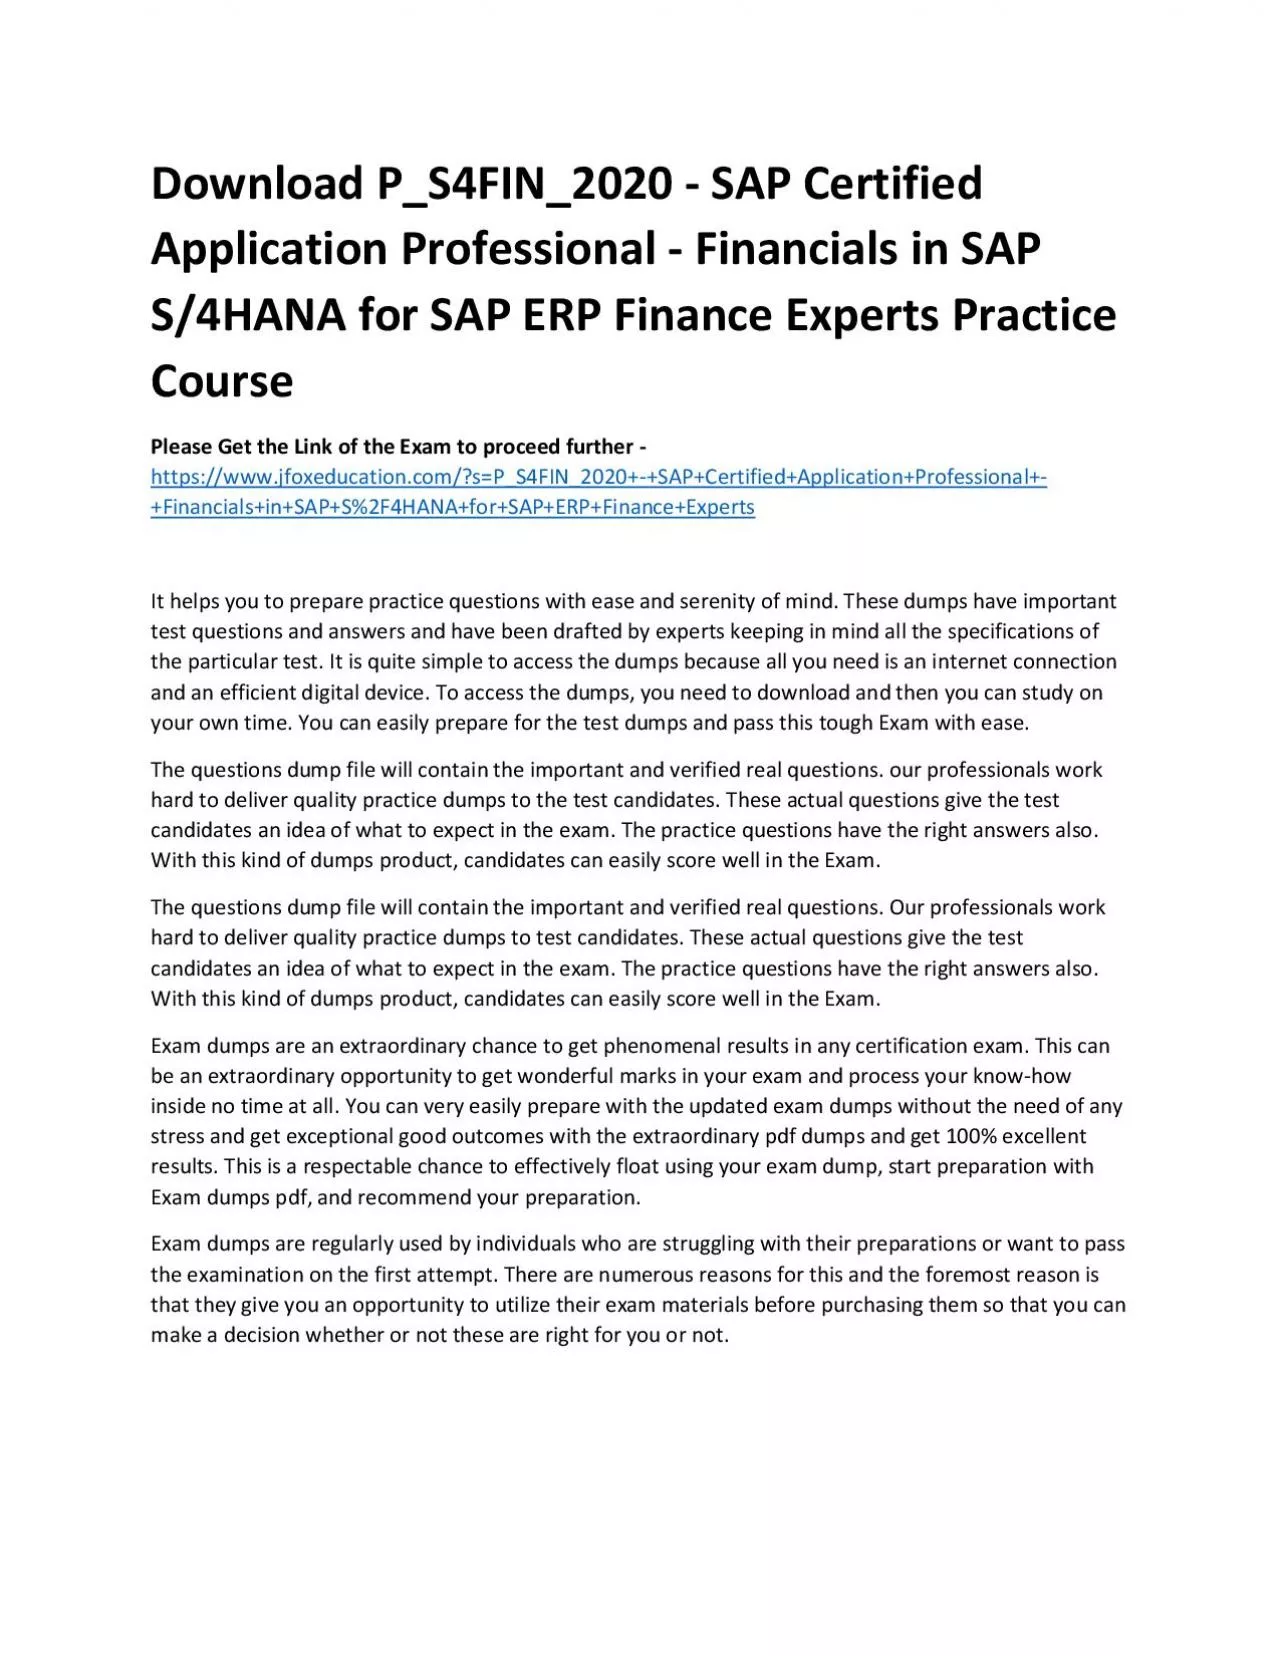 Download P_S4FIN_2020 - SAP Certified Application Professional - Financials in SAP S/4HANA